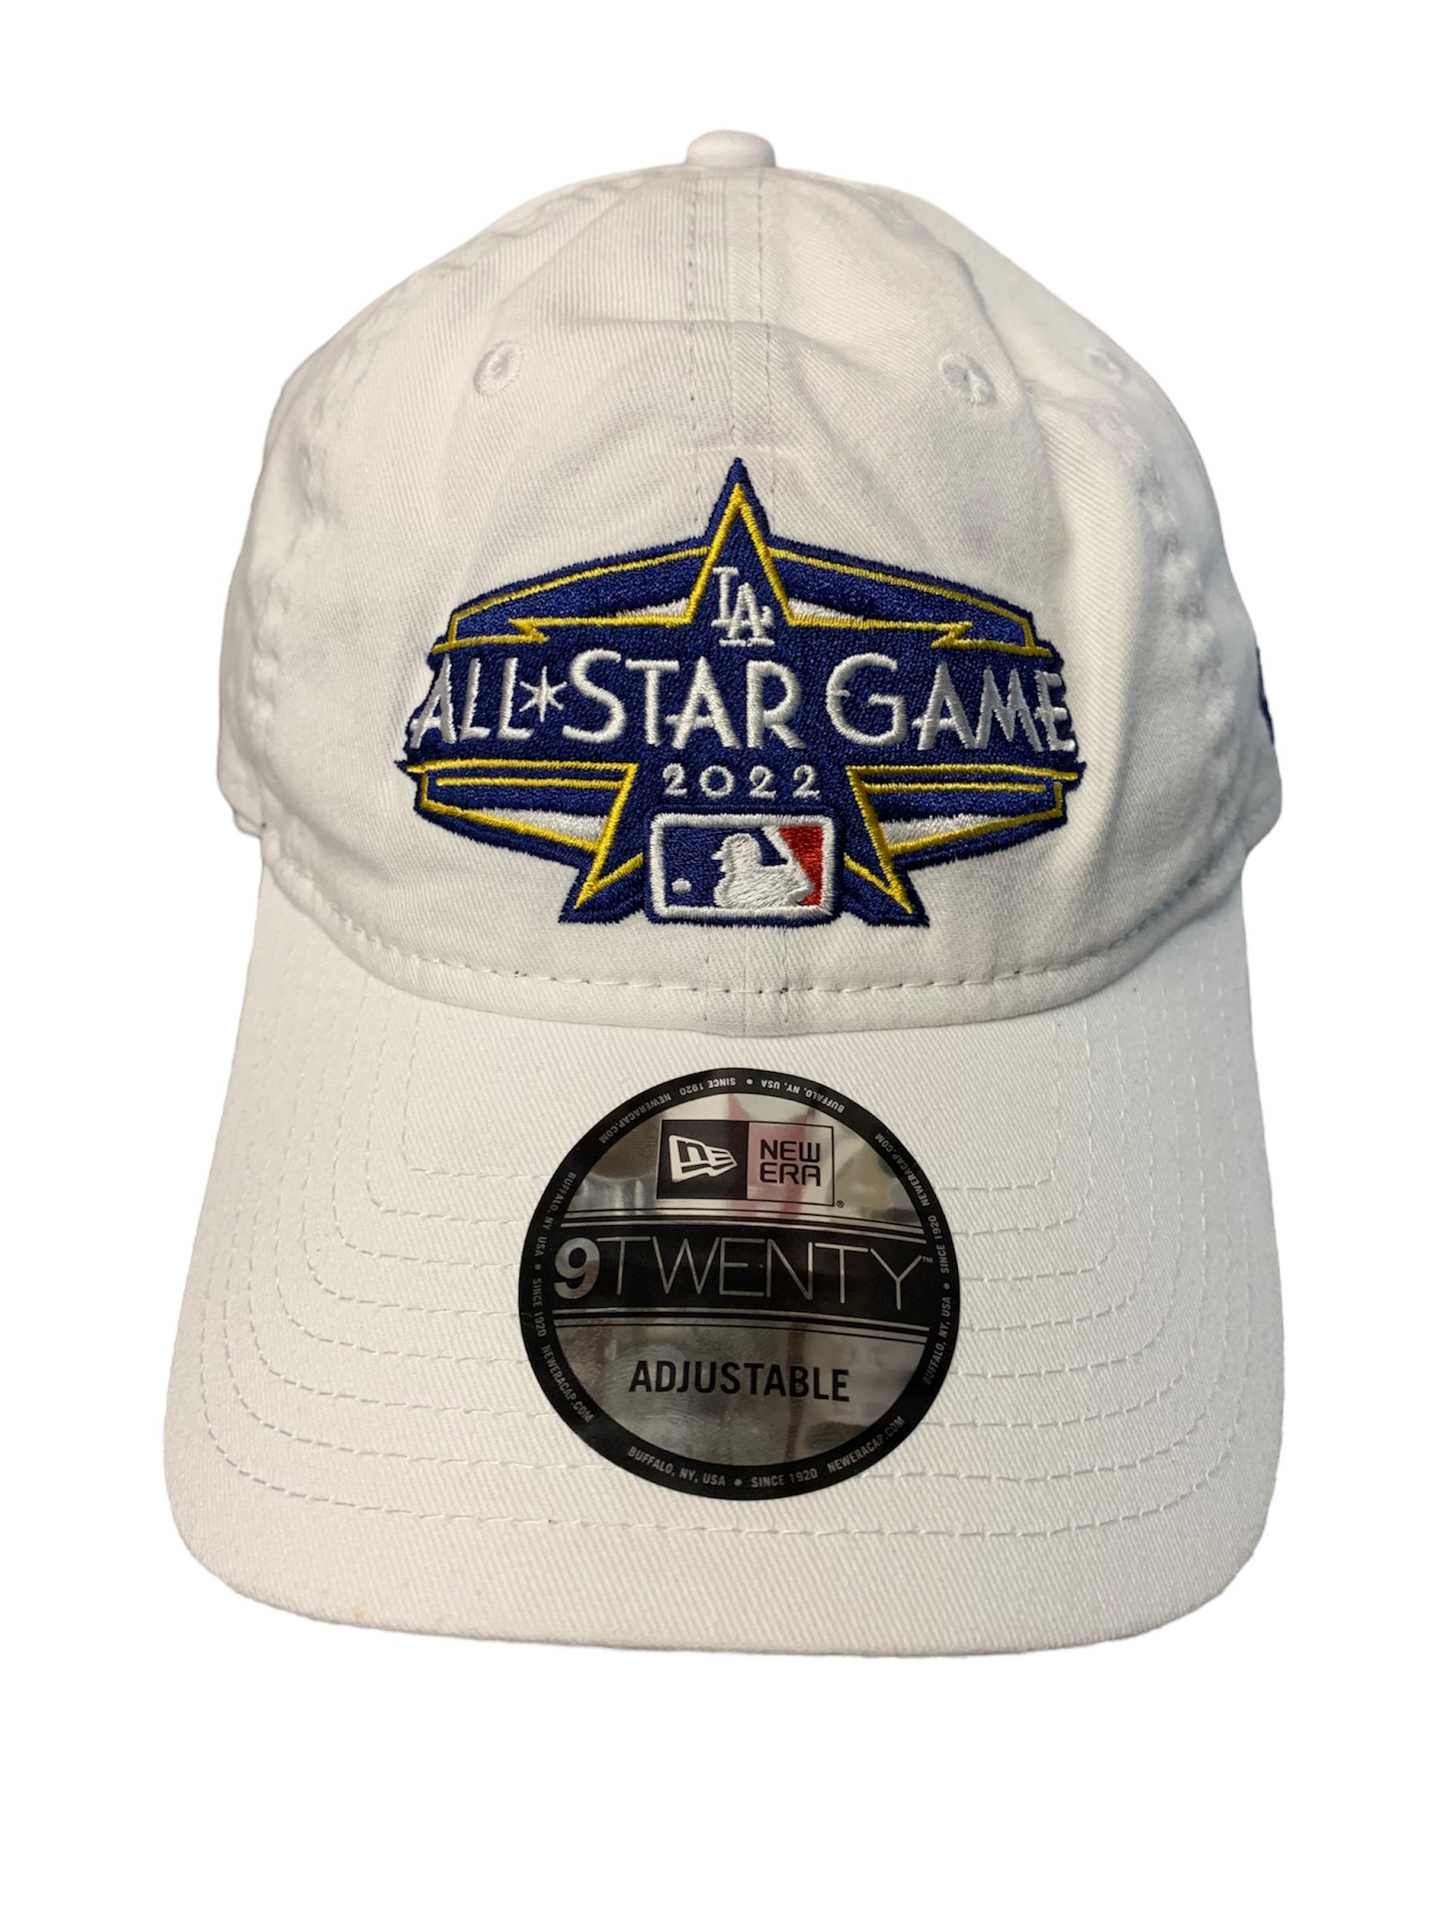 MLB ALL-STAR GAME CORE CLASSIC 9TWENTY ADJUSTABLE HAT - WHITE